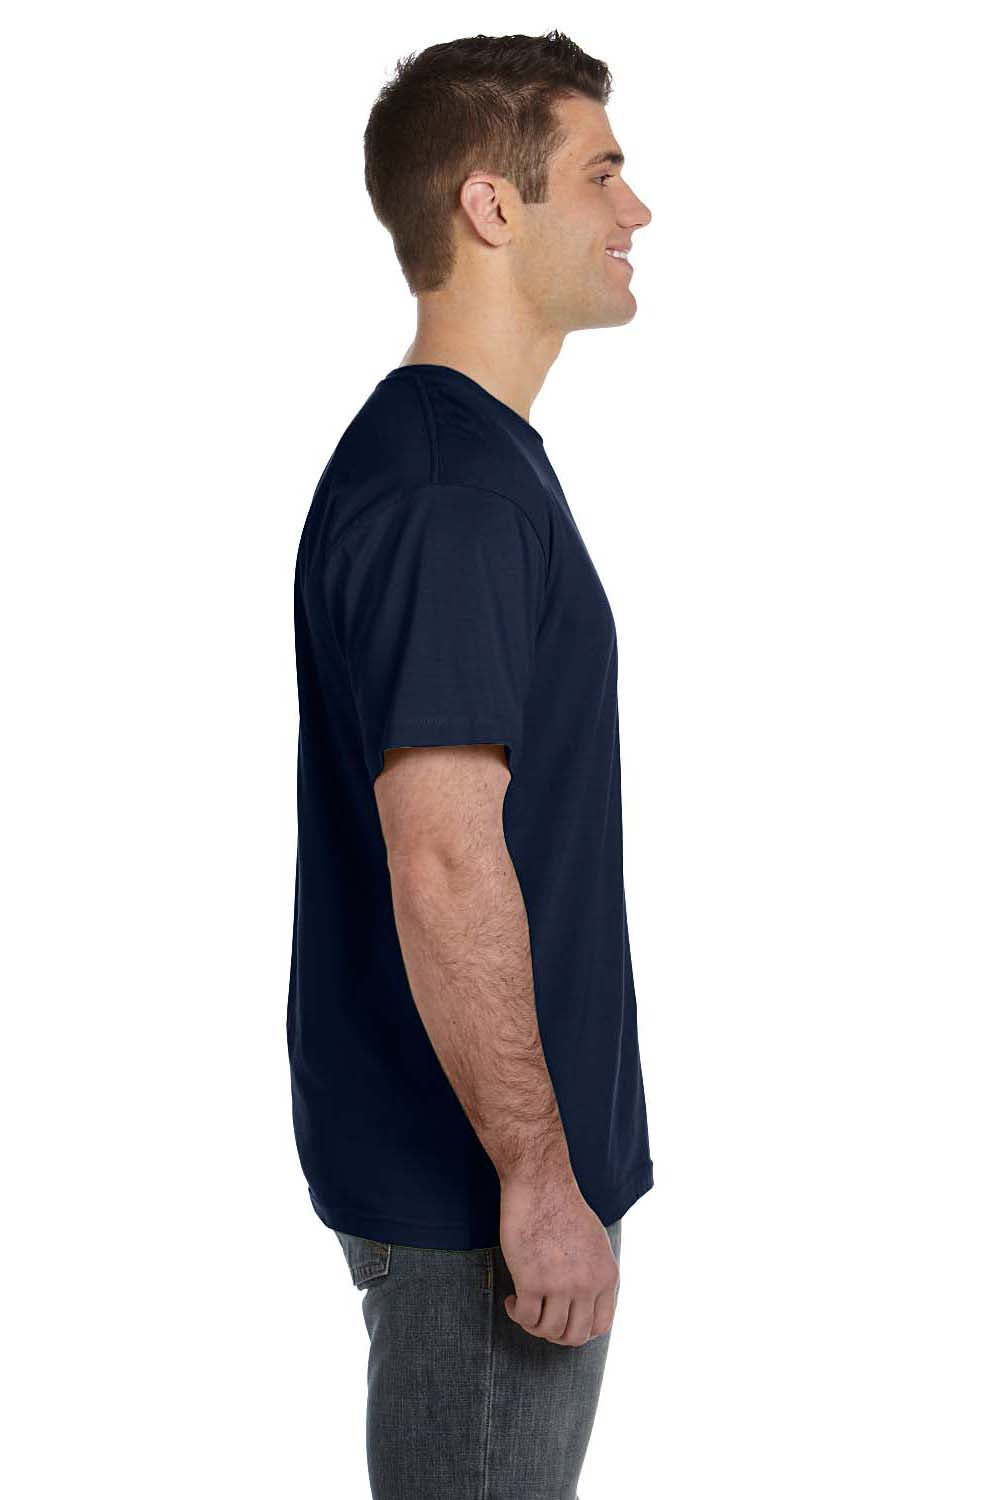 LAT 6901 Mens Fine Jersey Short Sleeve Crewneck T-Shirt Navy Blue Side